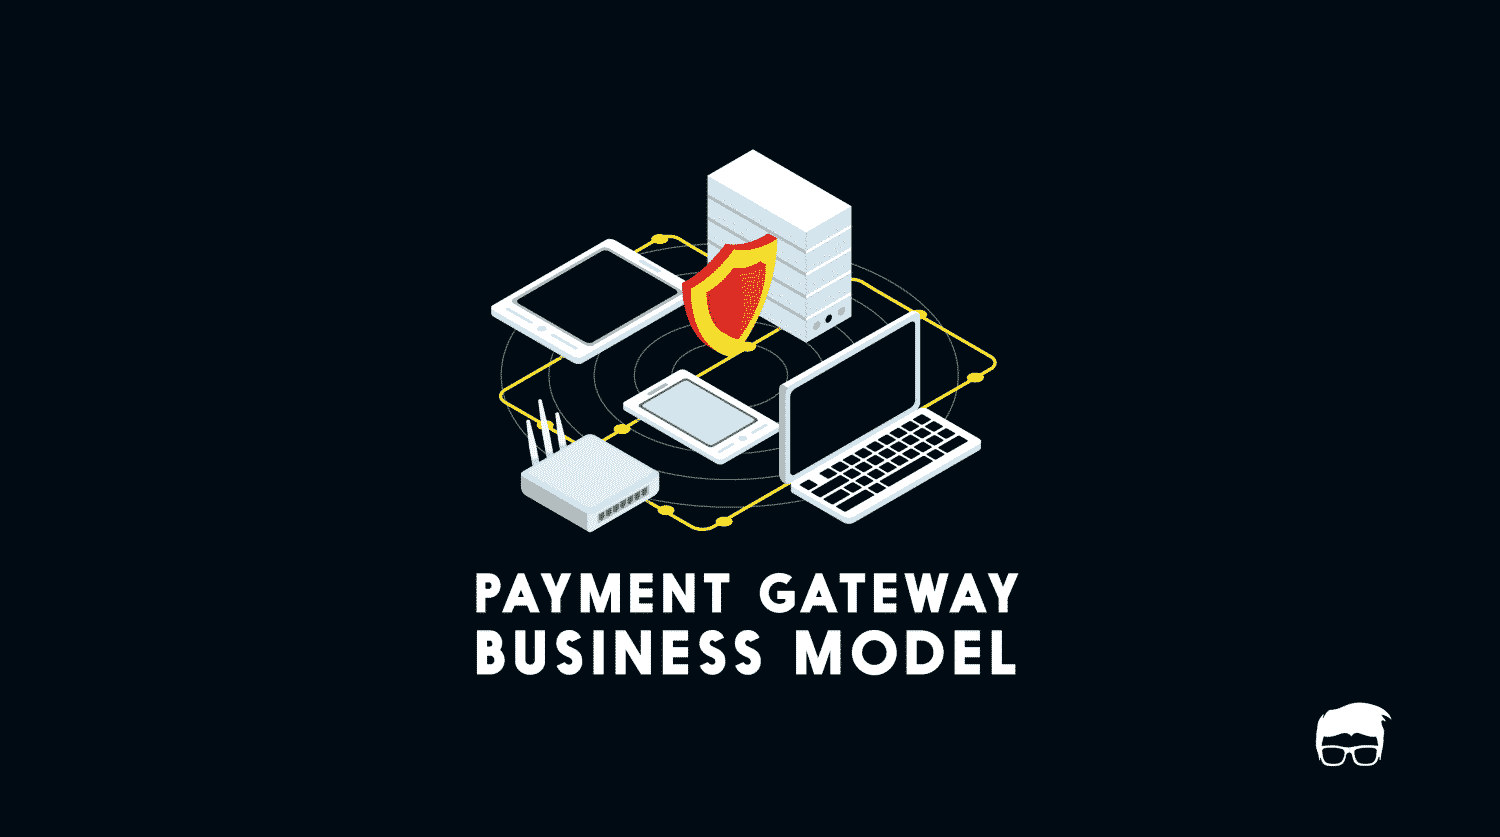 Payment Gateway Business Model | How Payment Gateways Work?